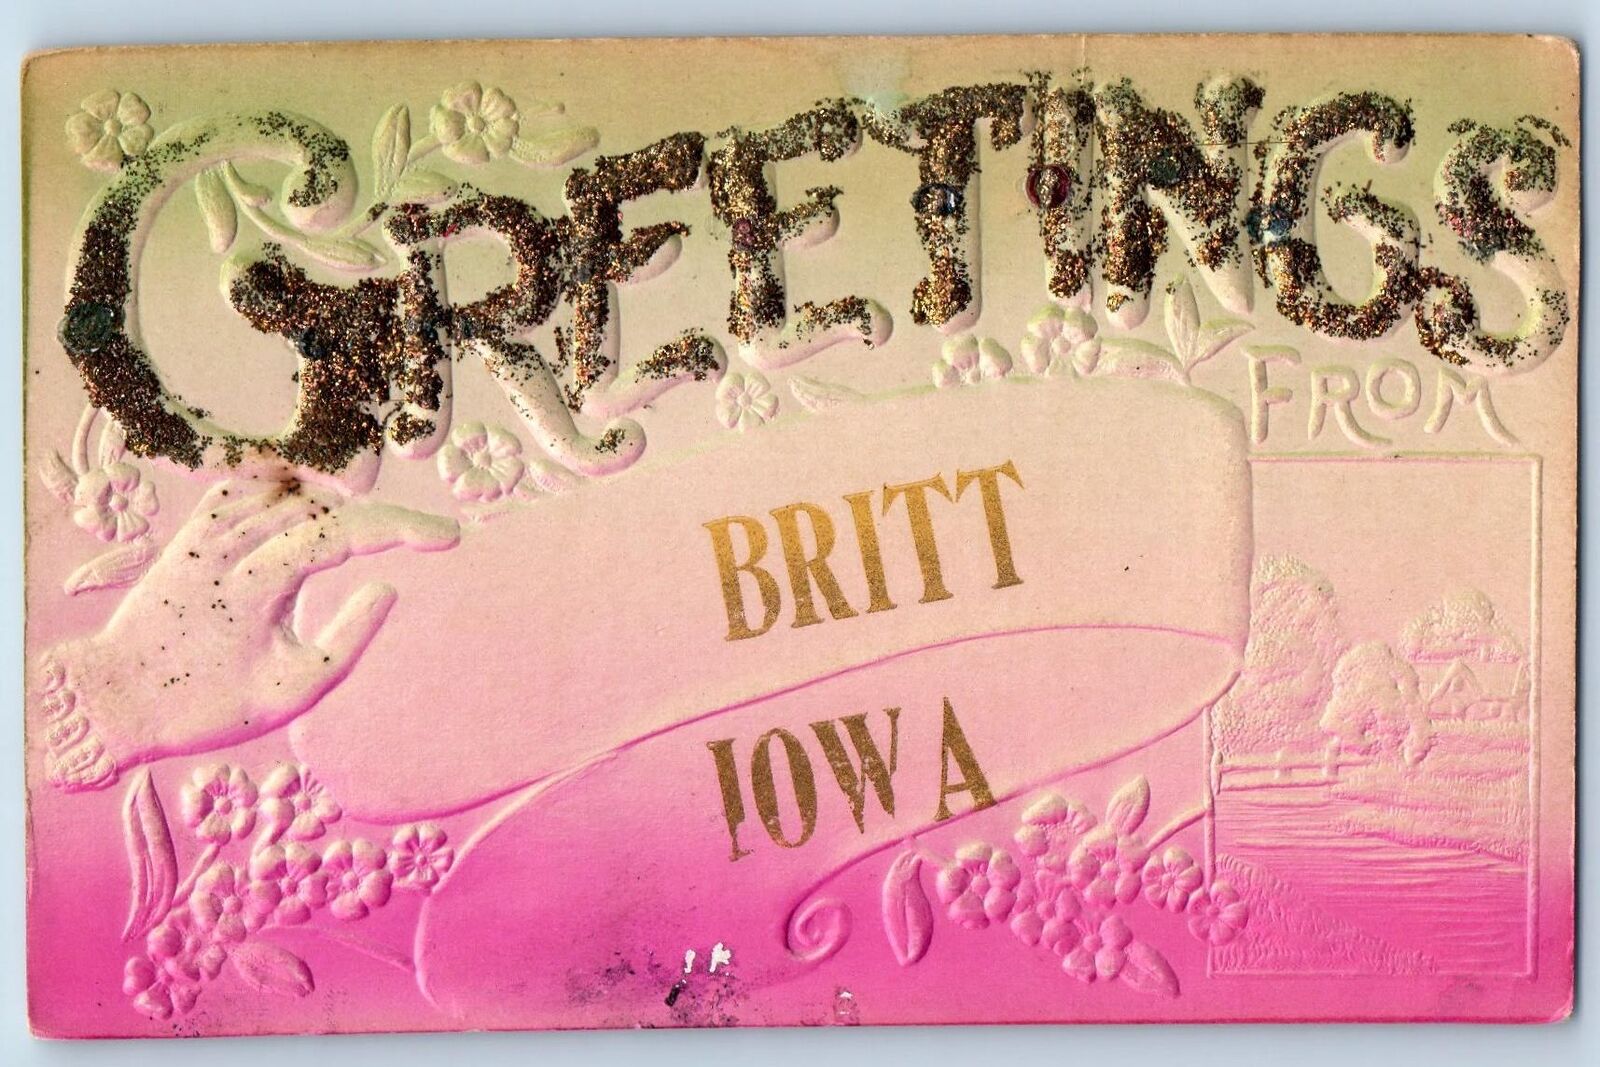 Britt Iowa IA Postcard Greetings Embossed Airbrushed Flower Leaves c1910 Antique